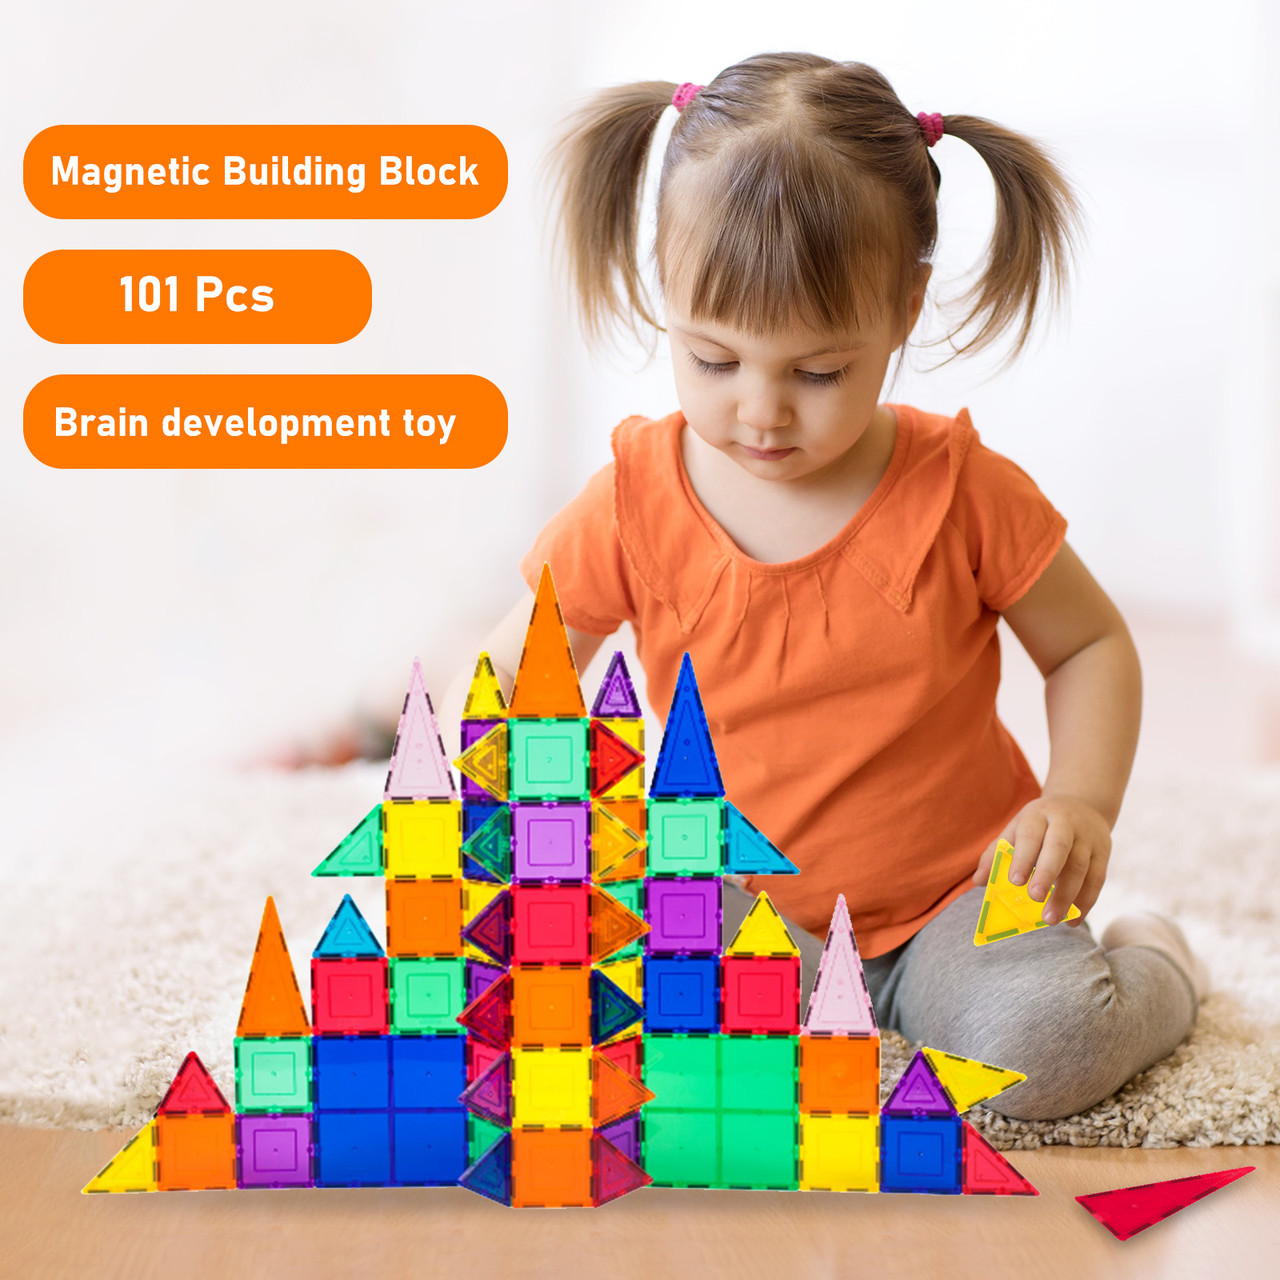 101 Pcs Magnetic Building Block Educational Child Brain Development Stacking Toy